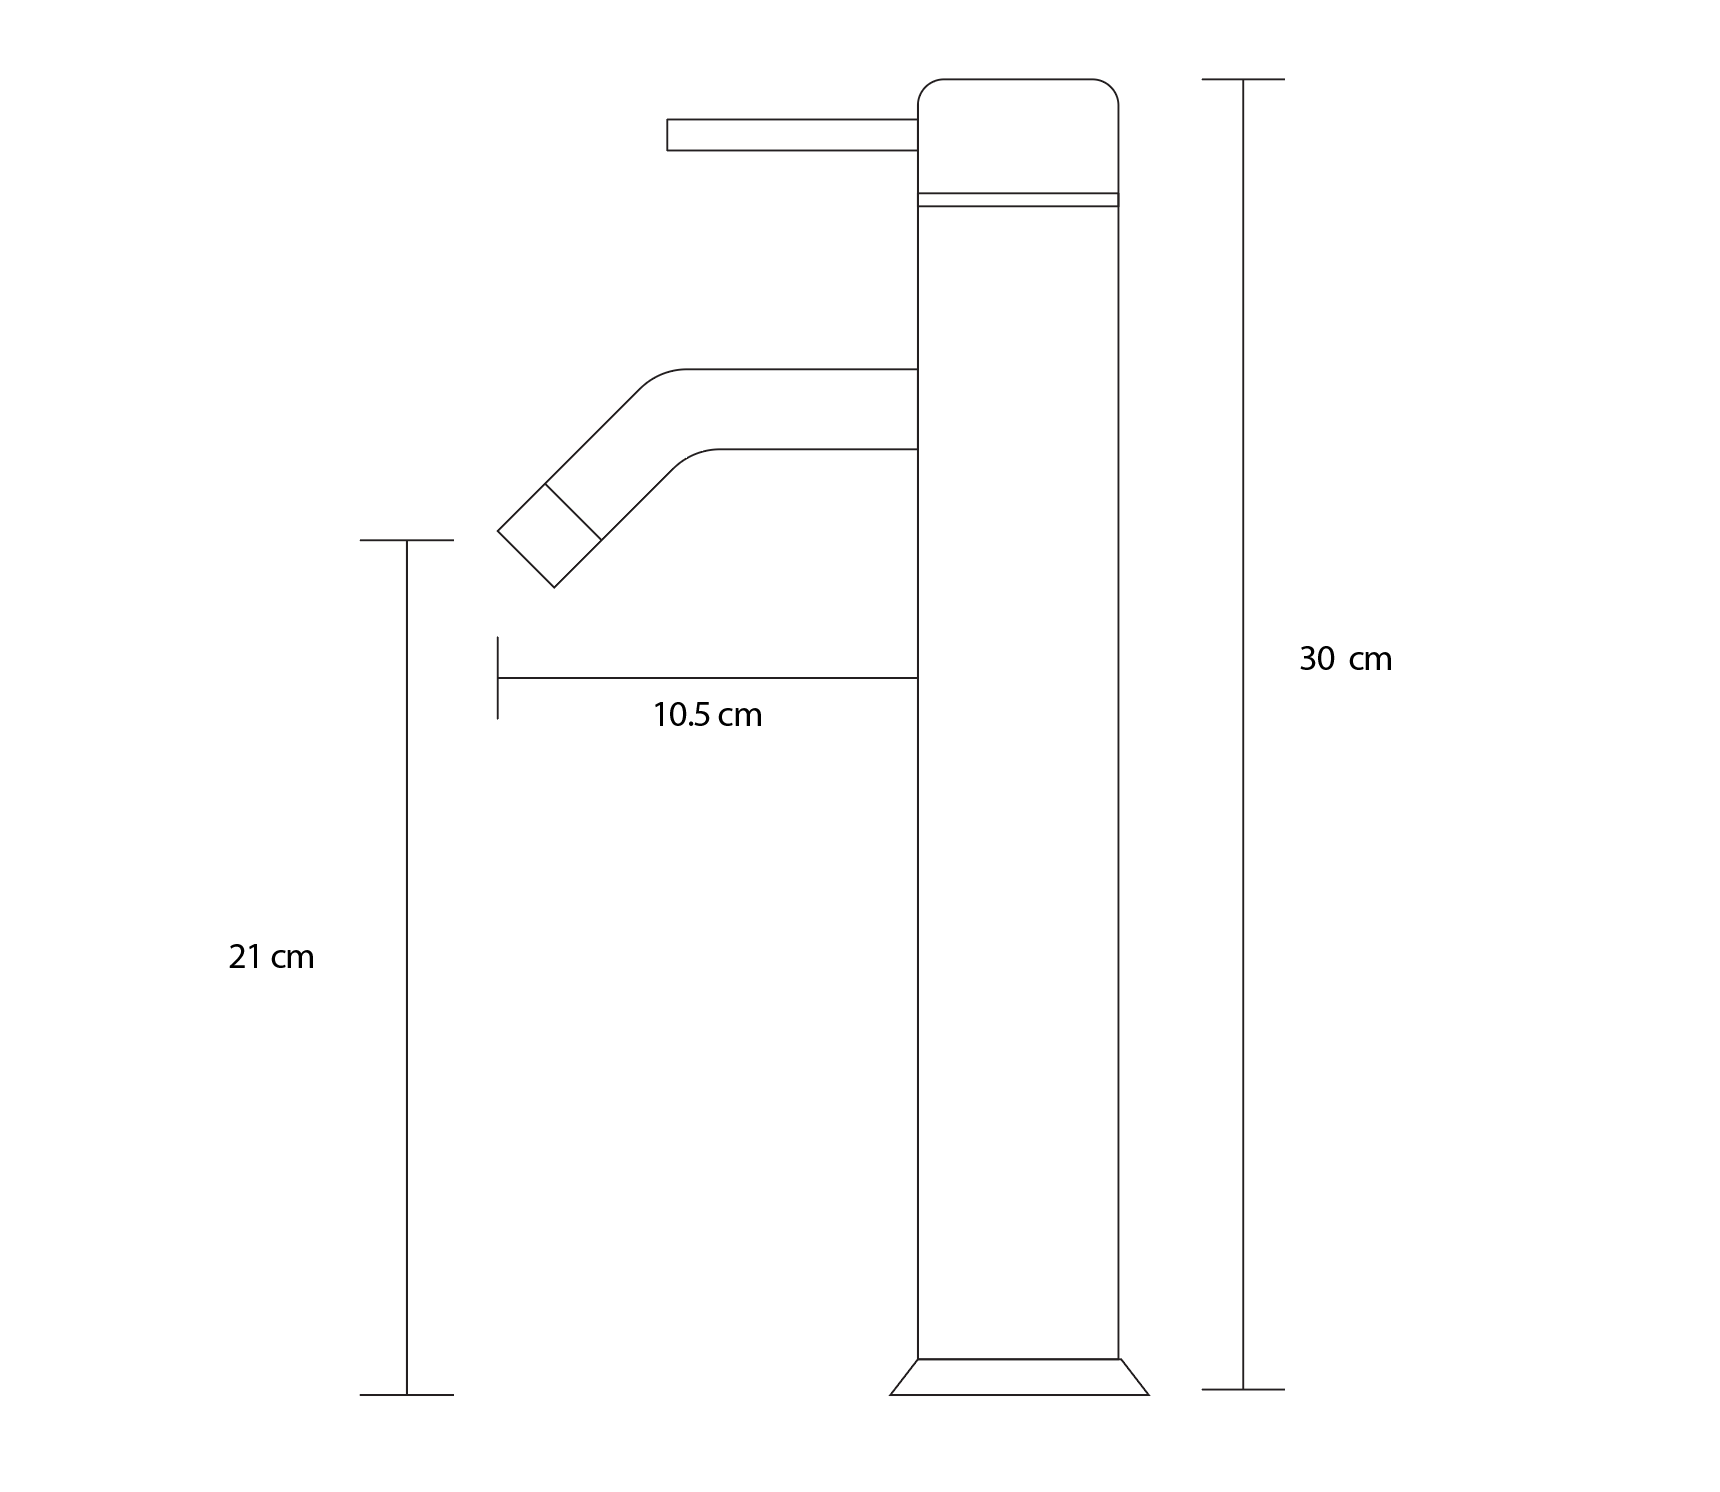 Deck / Sink Mount Classic handle Bathroom Faucet